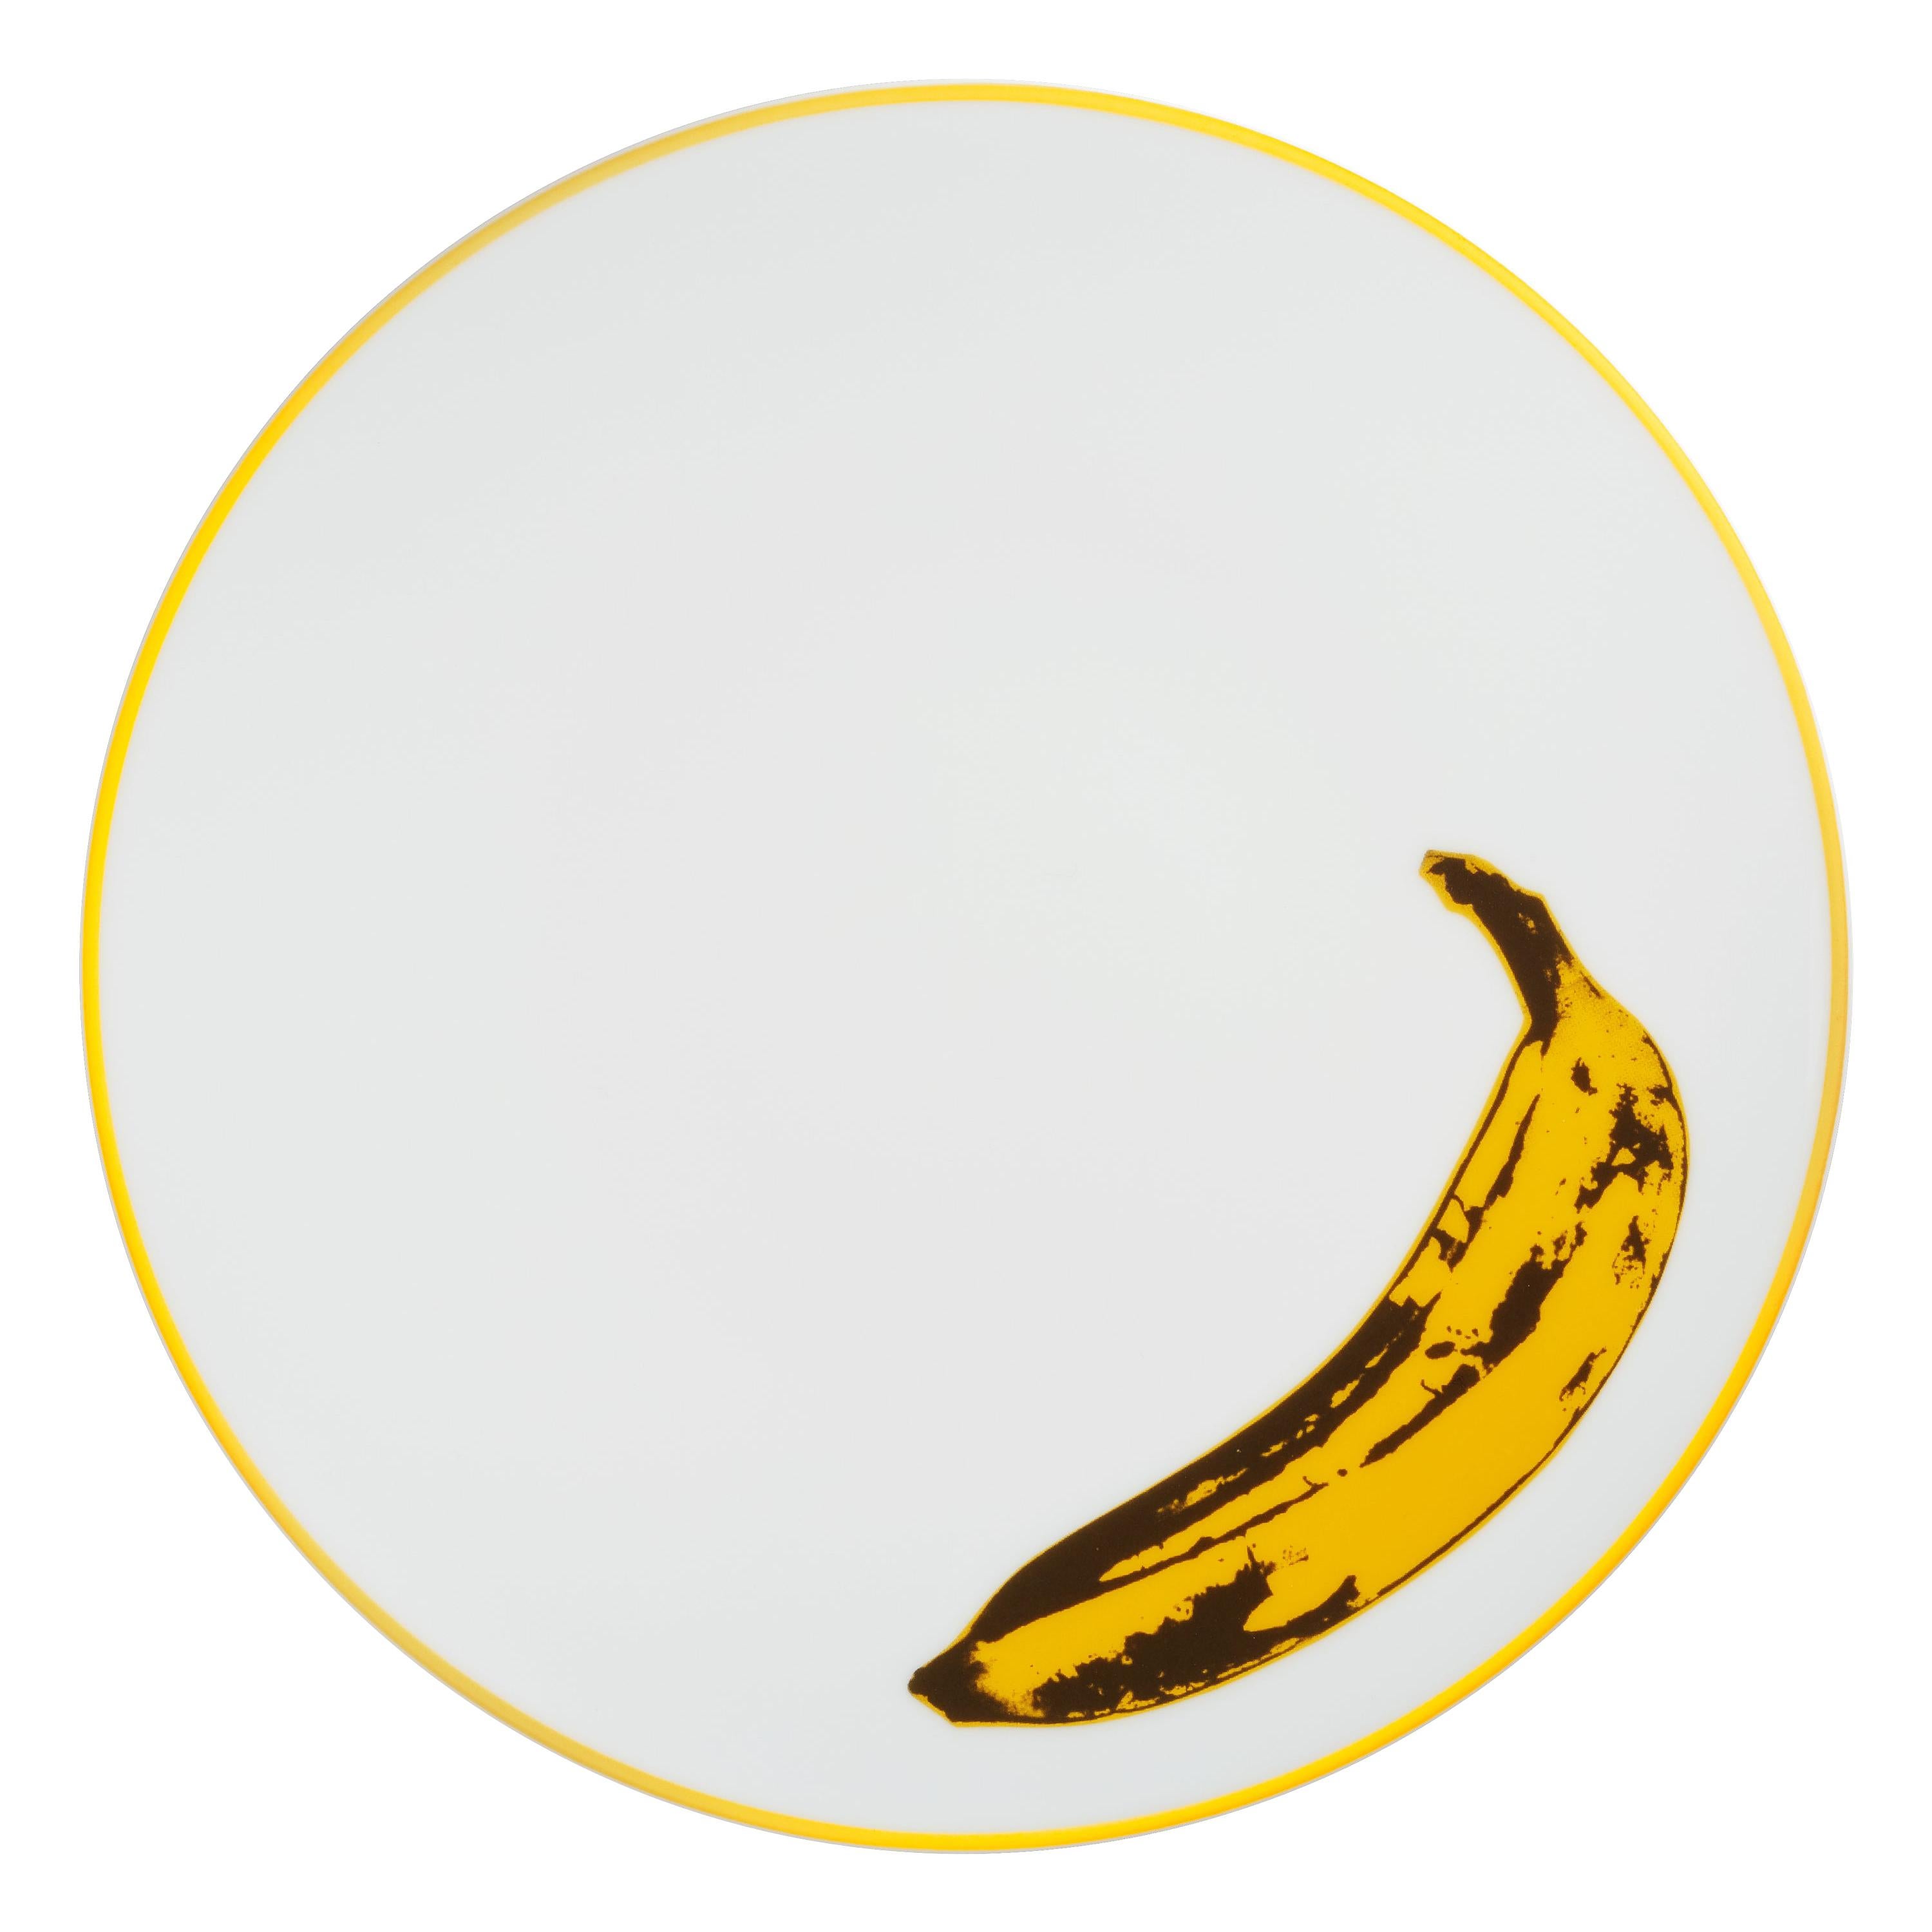 Banana Plate after Andy Warhol